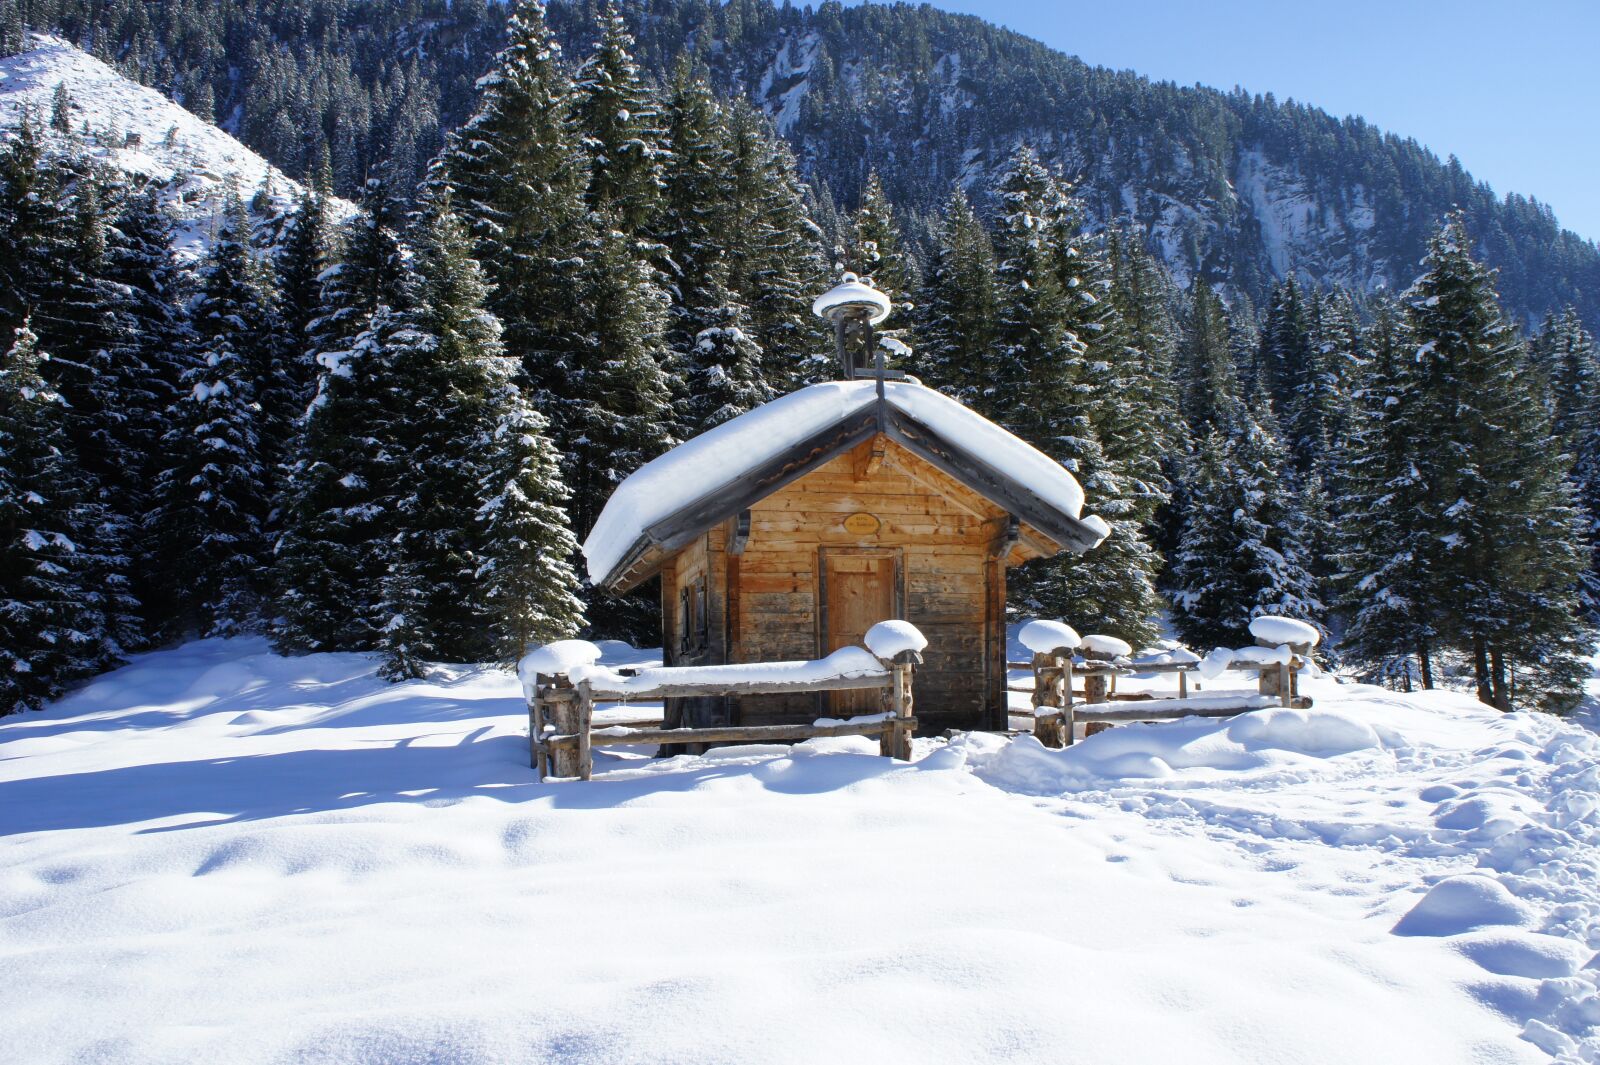 Sony Alpha NEX-5 sample photo. Winter, snow, mountains photography